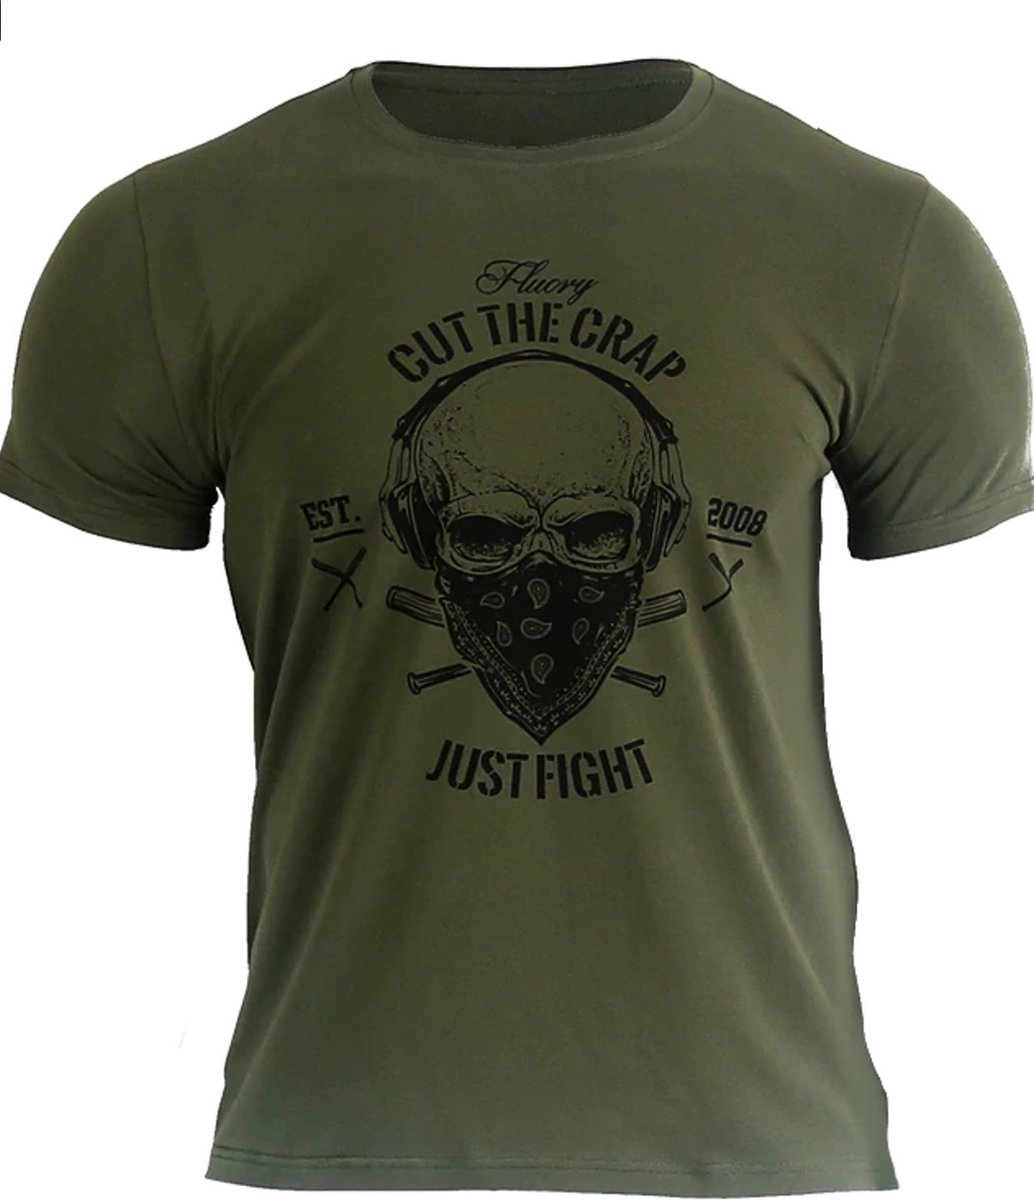 Fluory Cut the Crap Just Fight T-shirt Military Green maat XXL